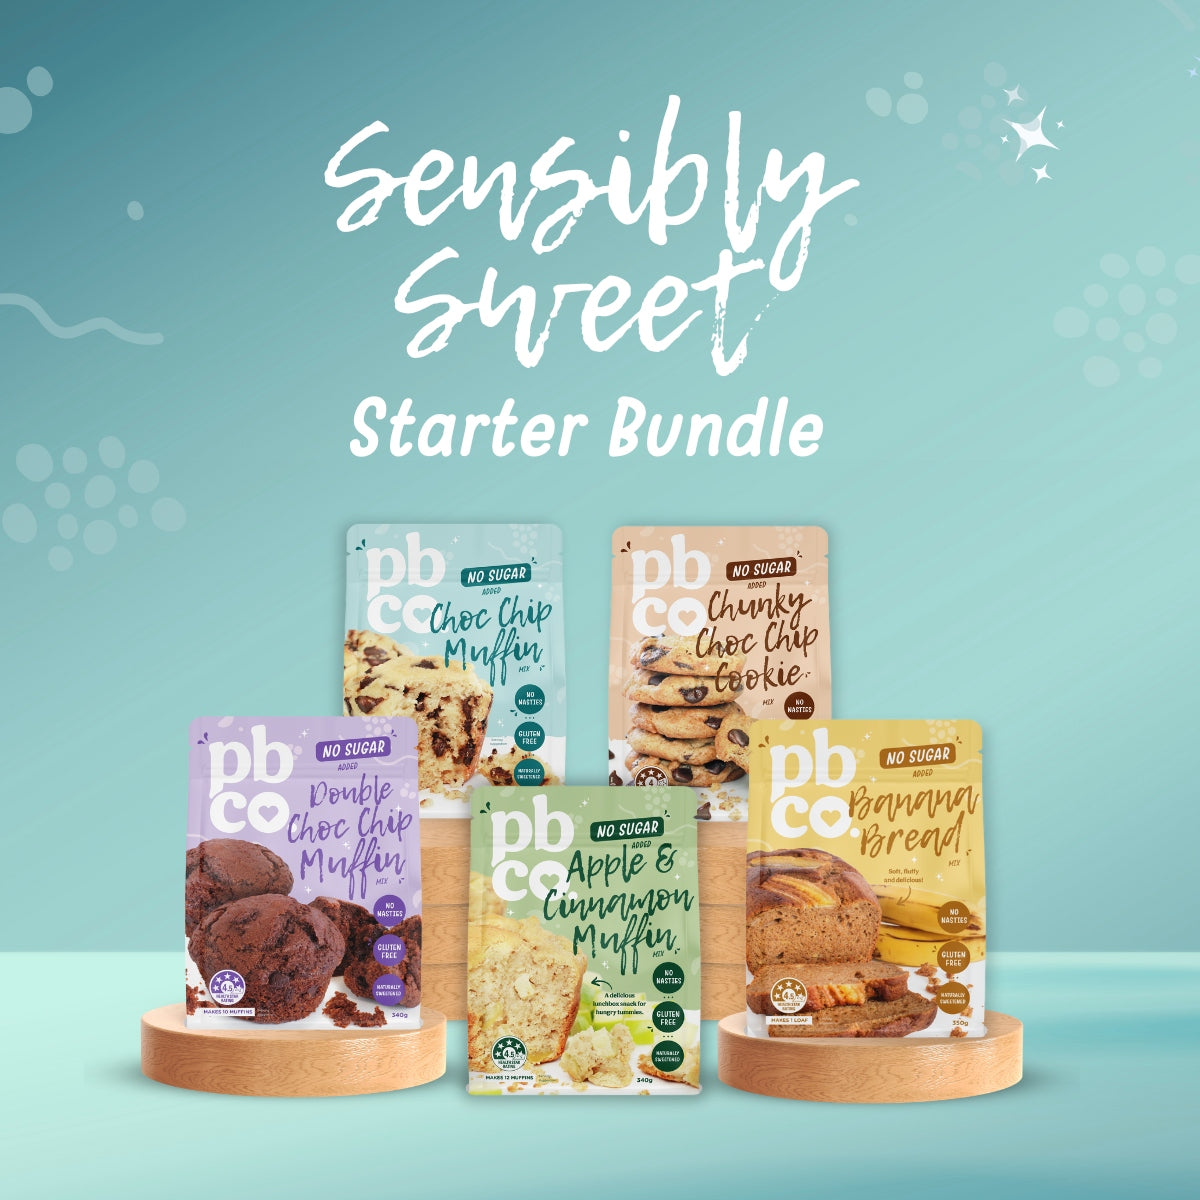 Sensibly Sweet Starter Bundle - Low carb & sugar free  - Just $59.75! Shop now at PBCo.